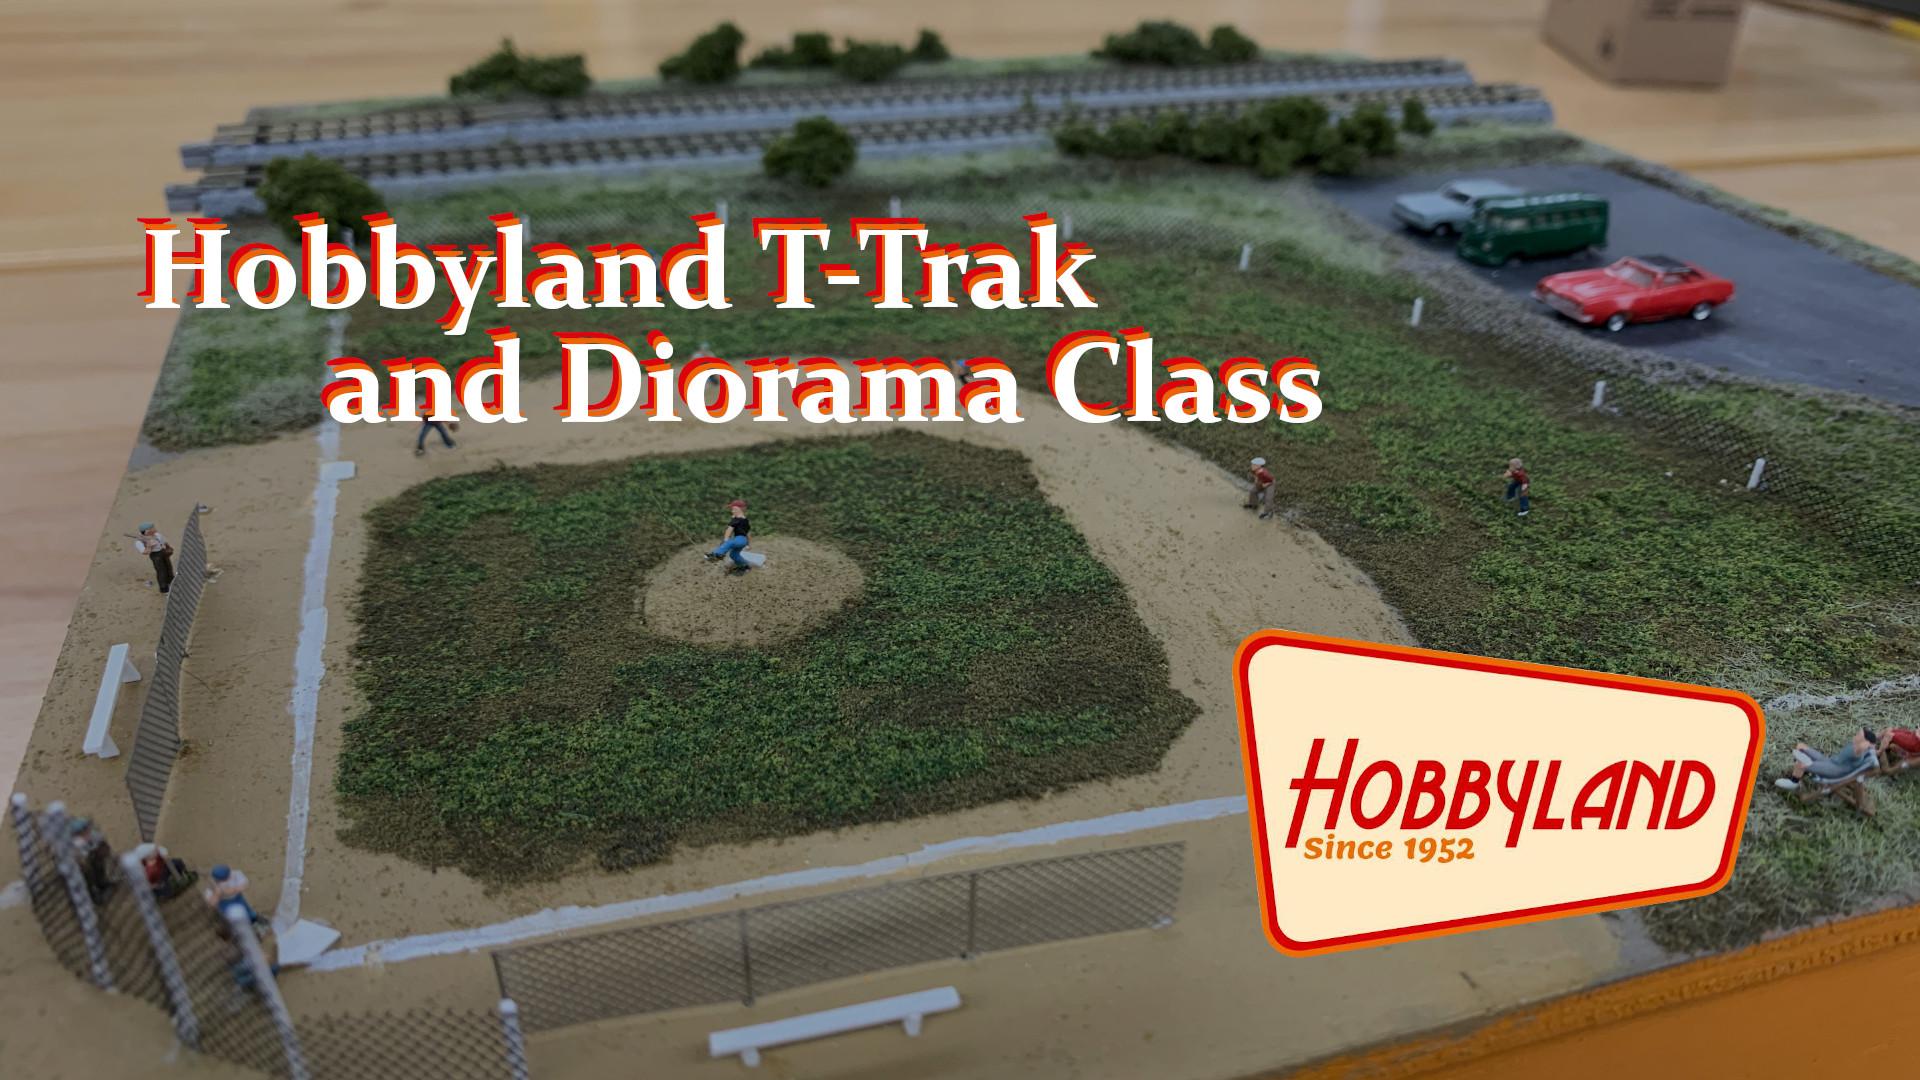 Hobbyland T-trak and diorama class Winter 2020